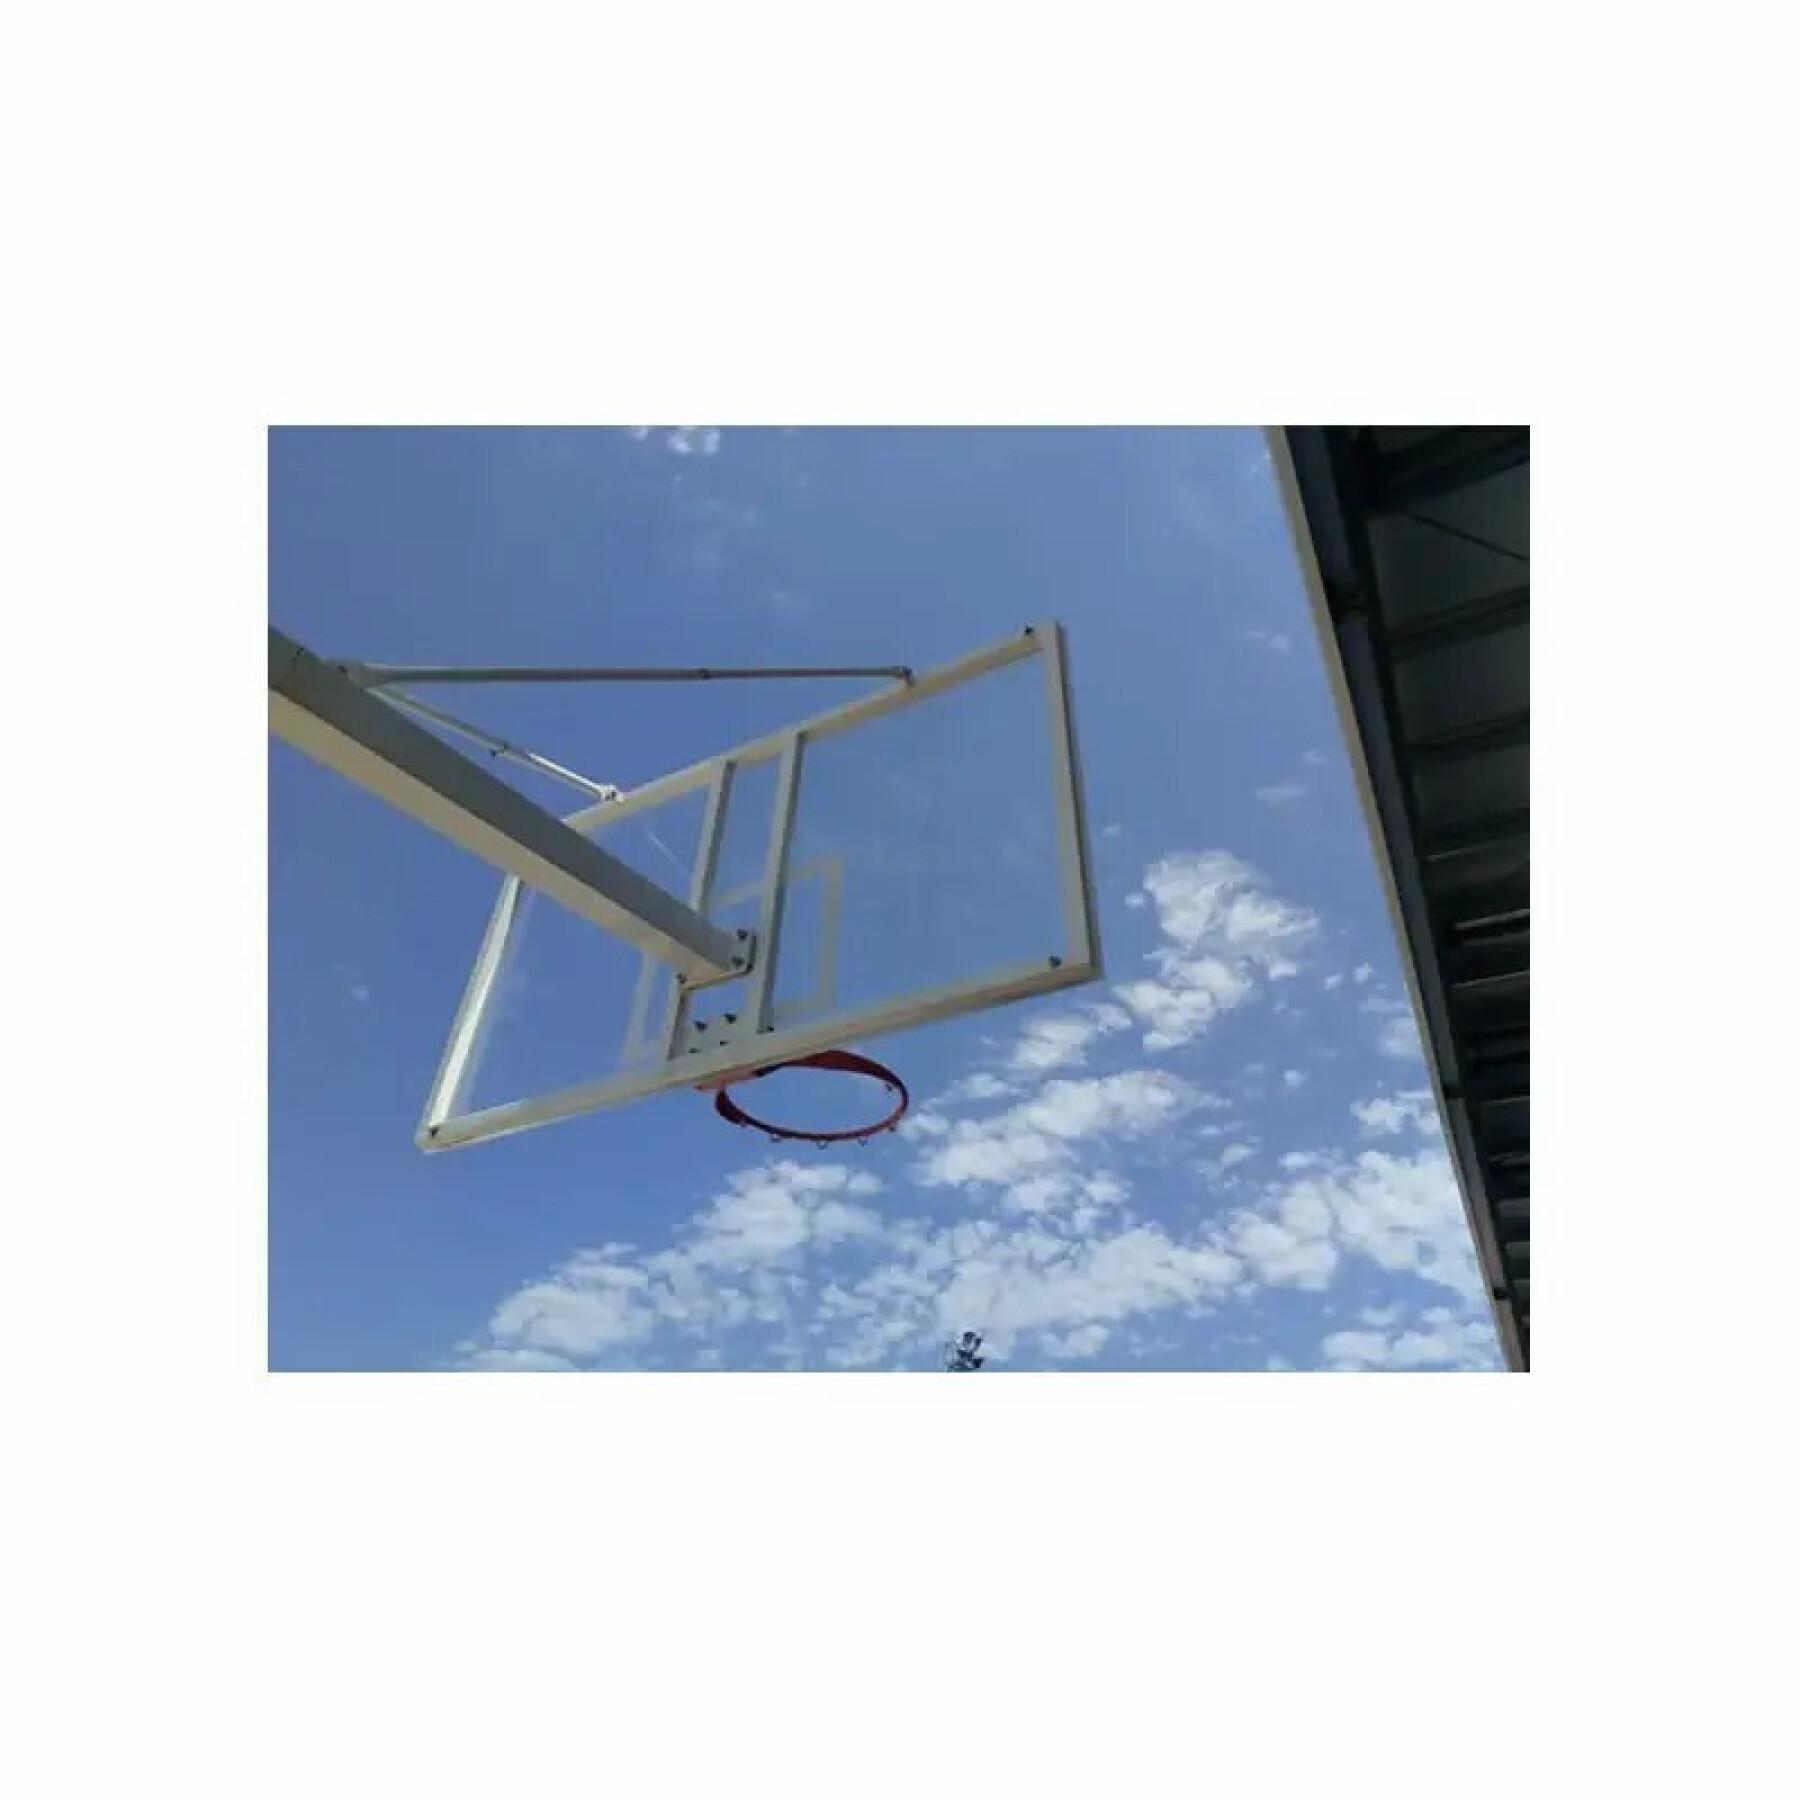 Conjunto de 2 aros de basquetebol de tubo simples com base de âncora - sem pranchas ou aros Softee Equipment Deluxe